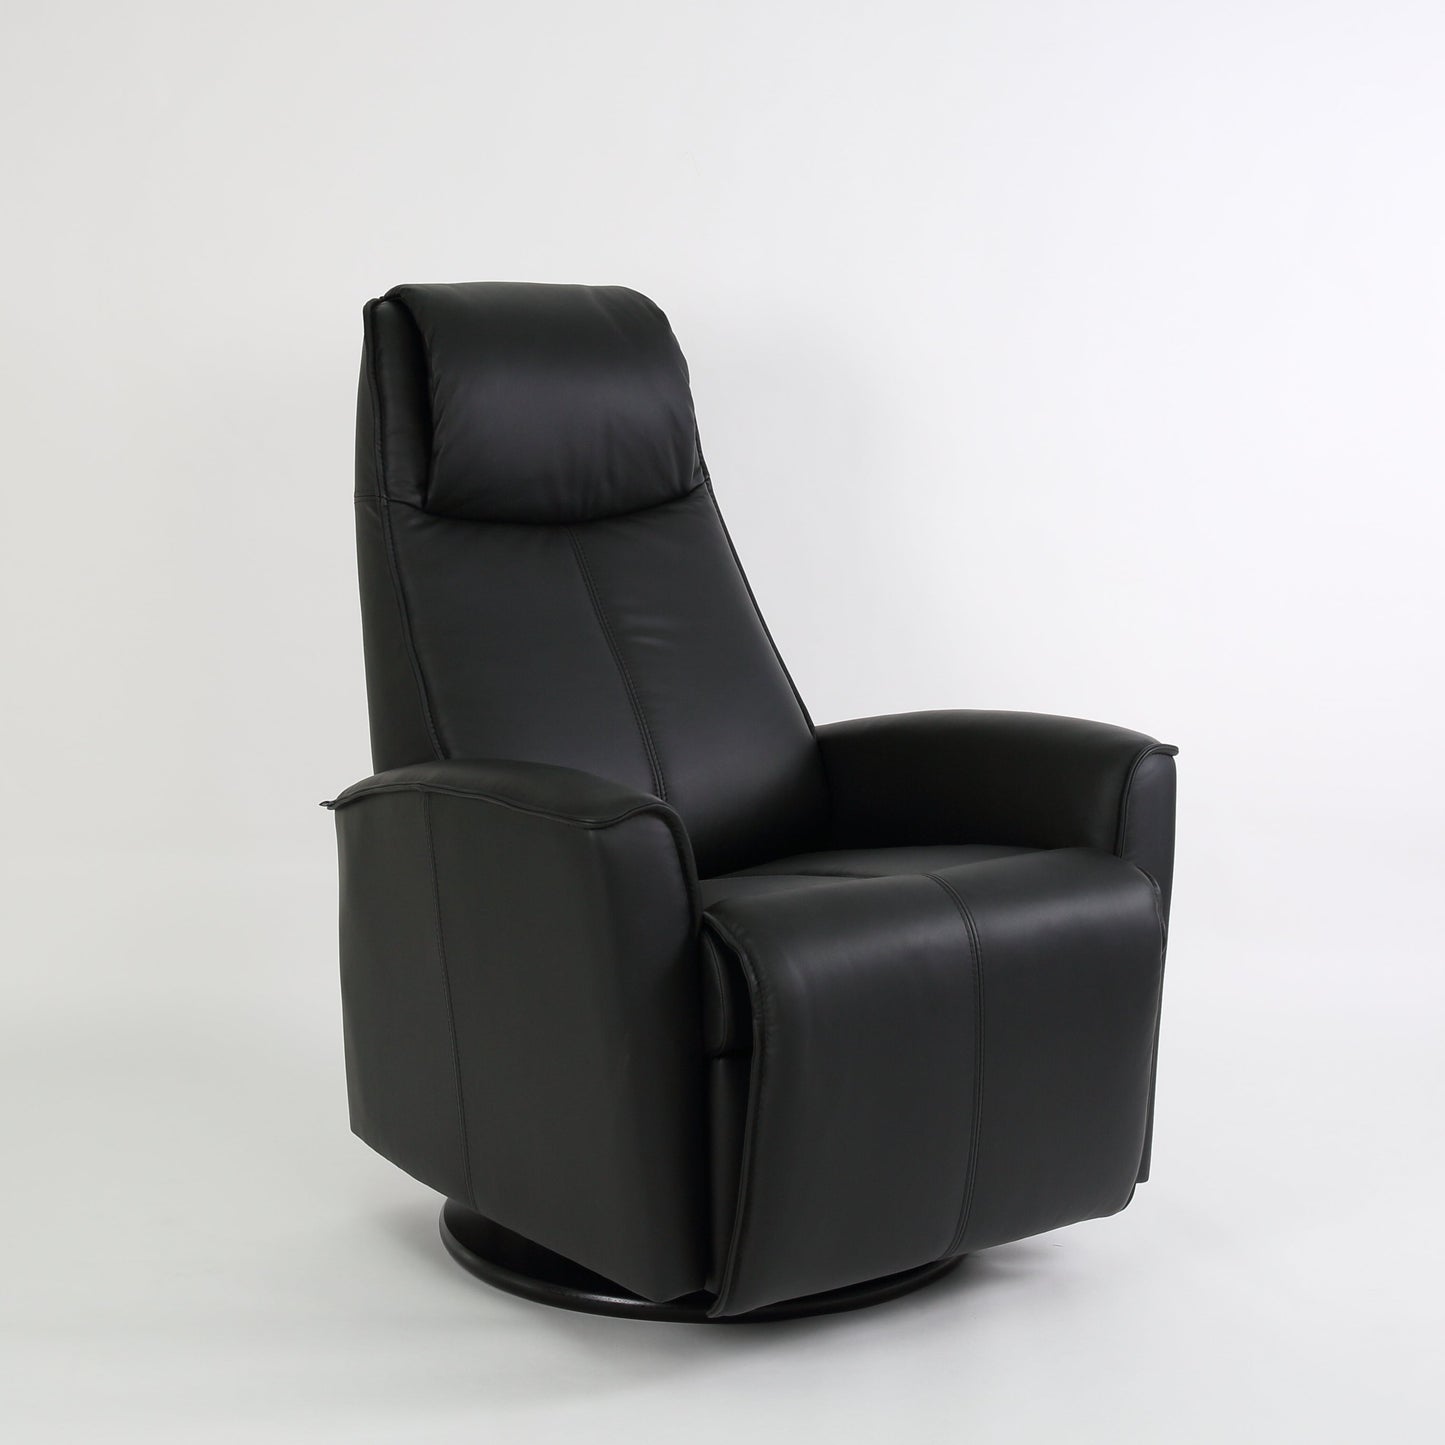 Fjords - Urban Relax Power Recliner Chair